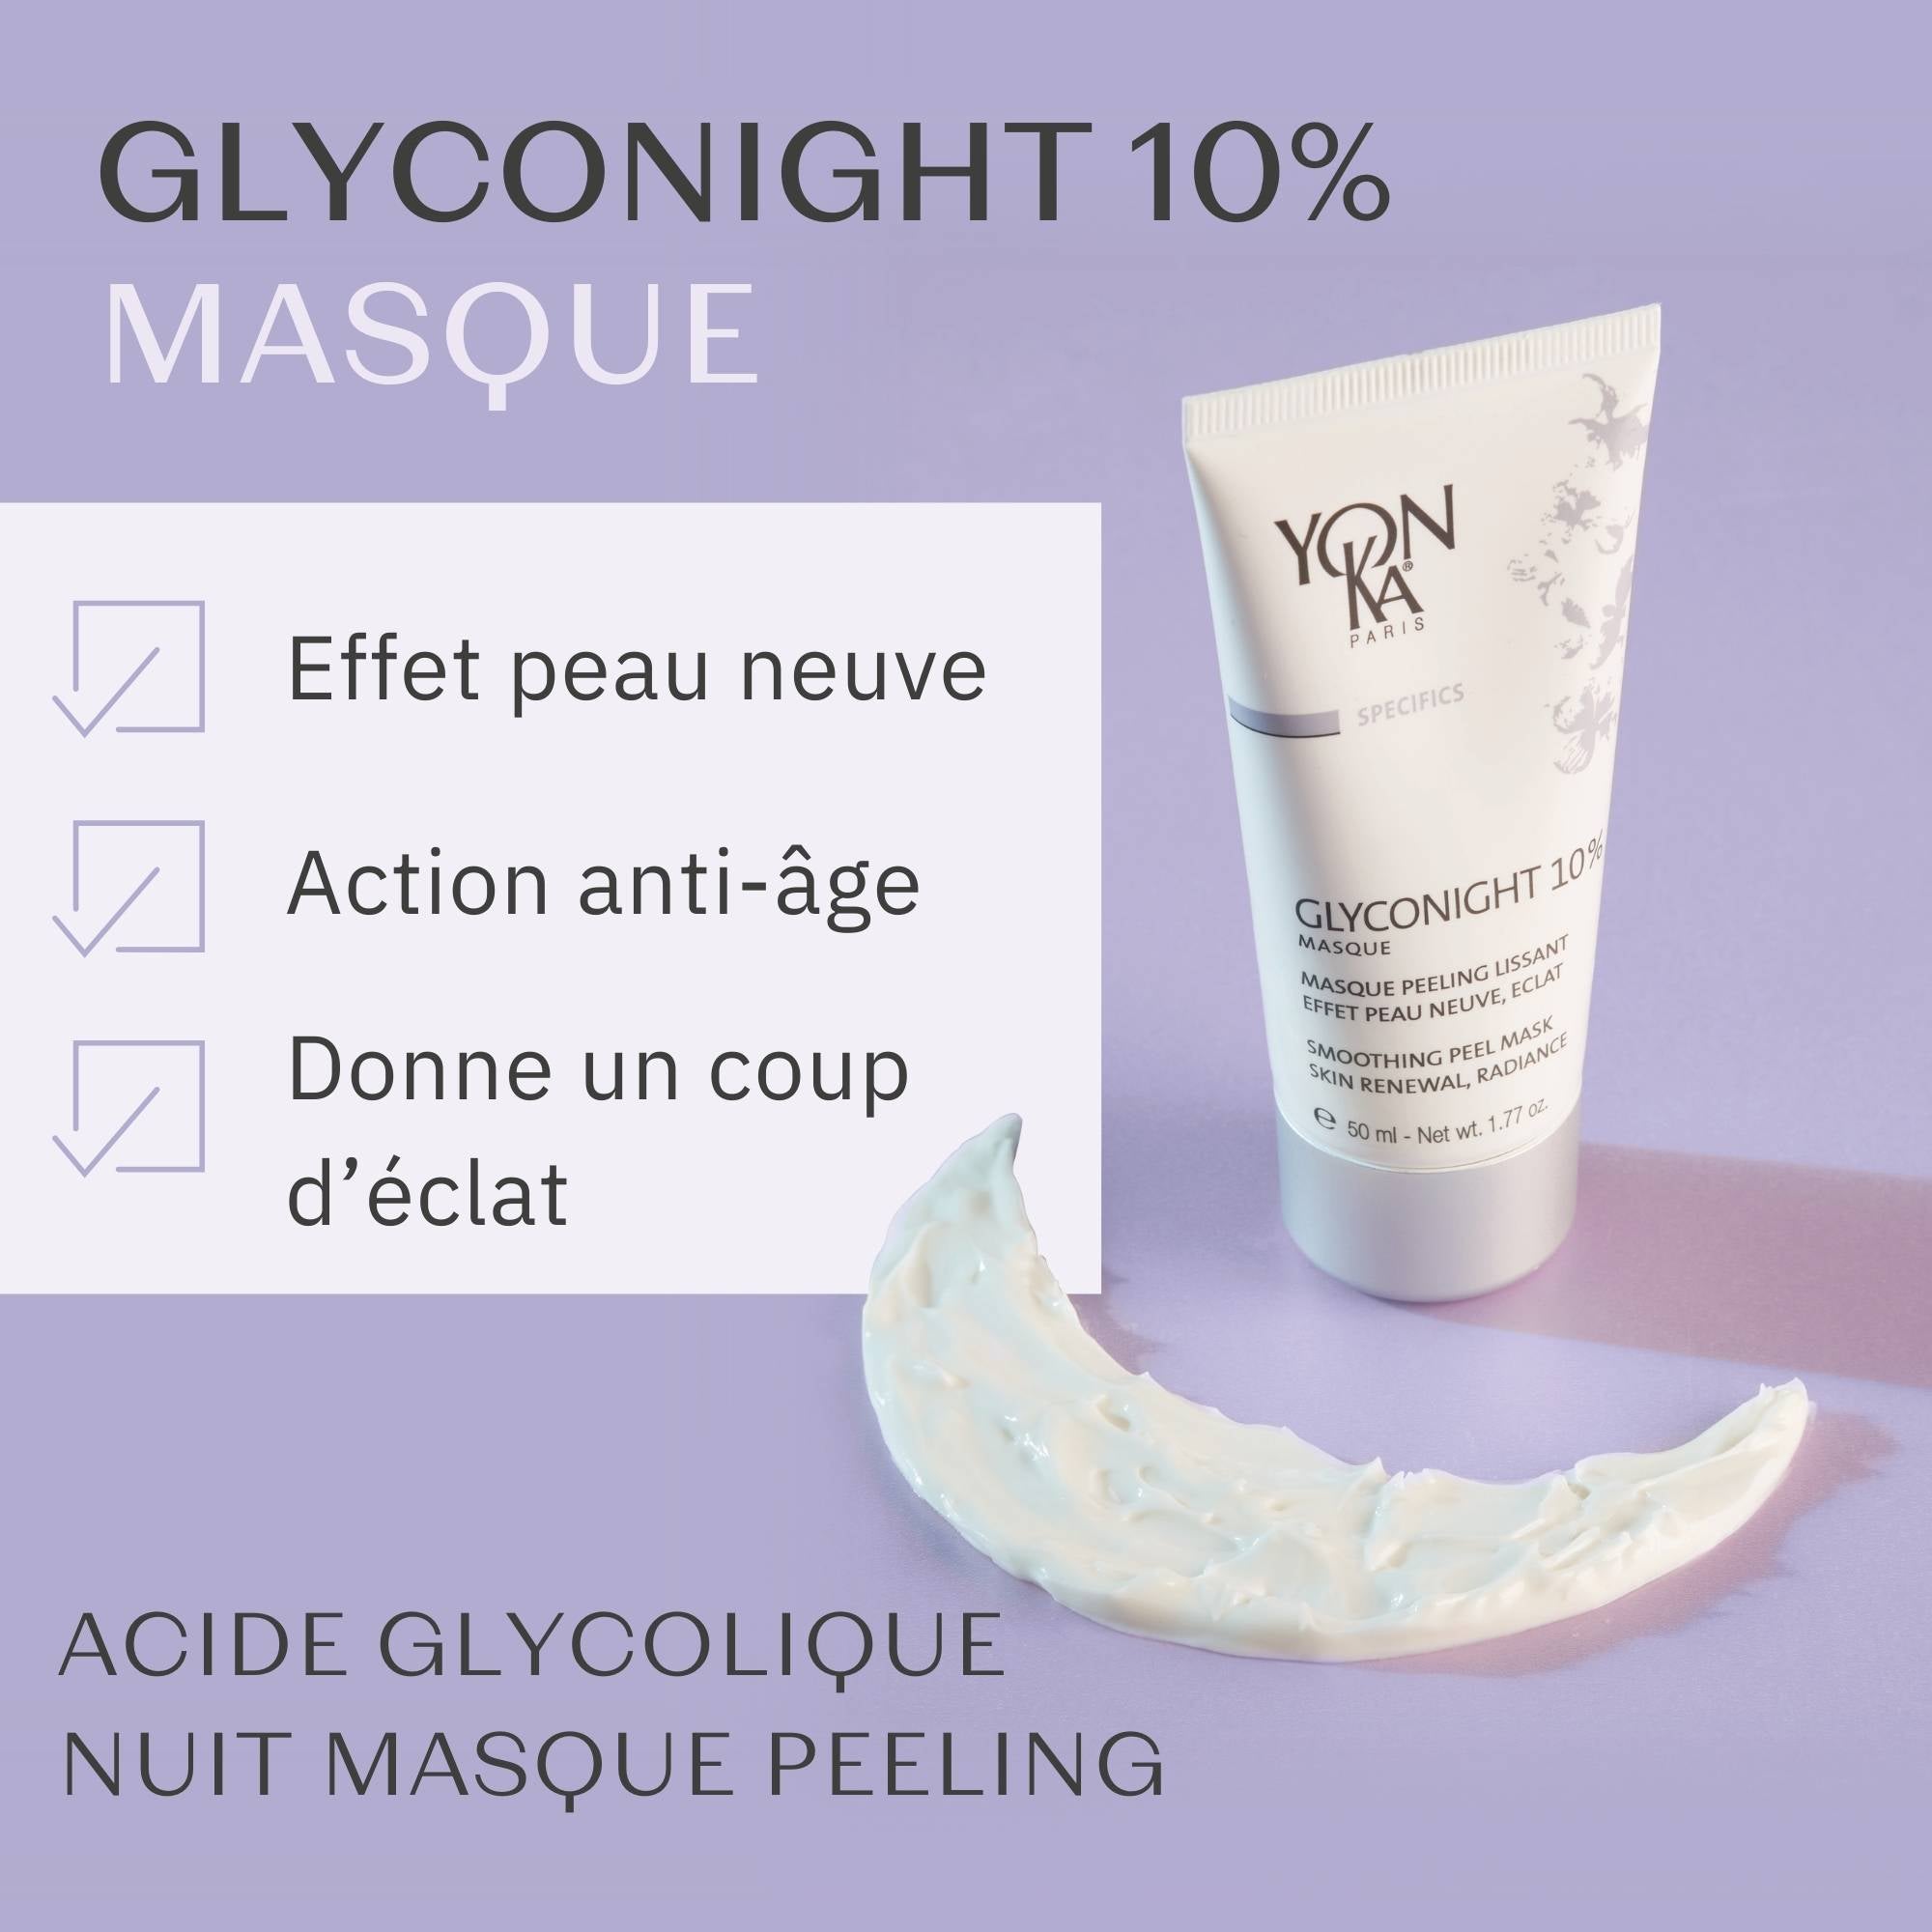 Glyconight 10% Mask